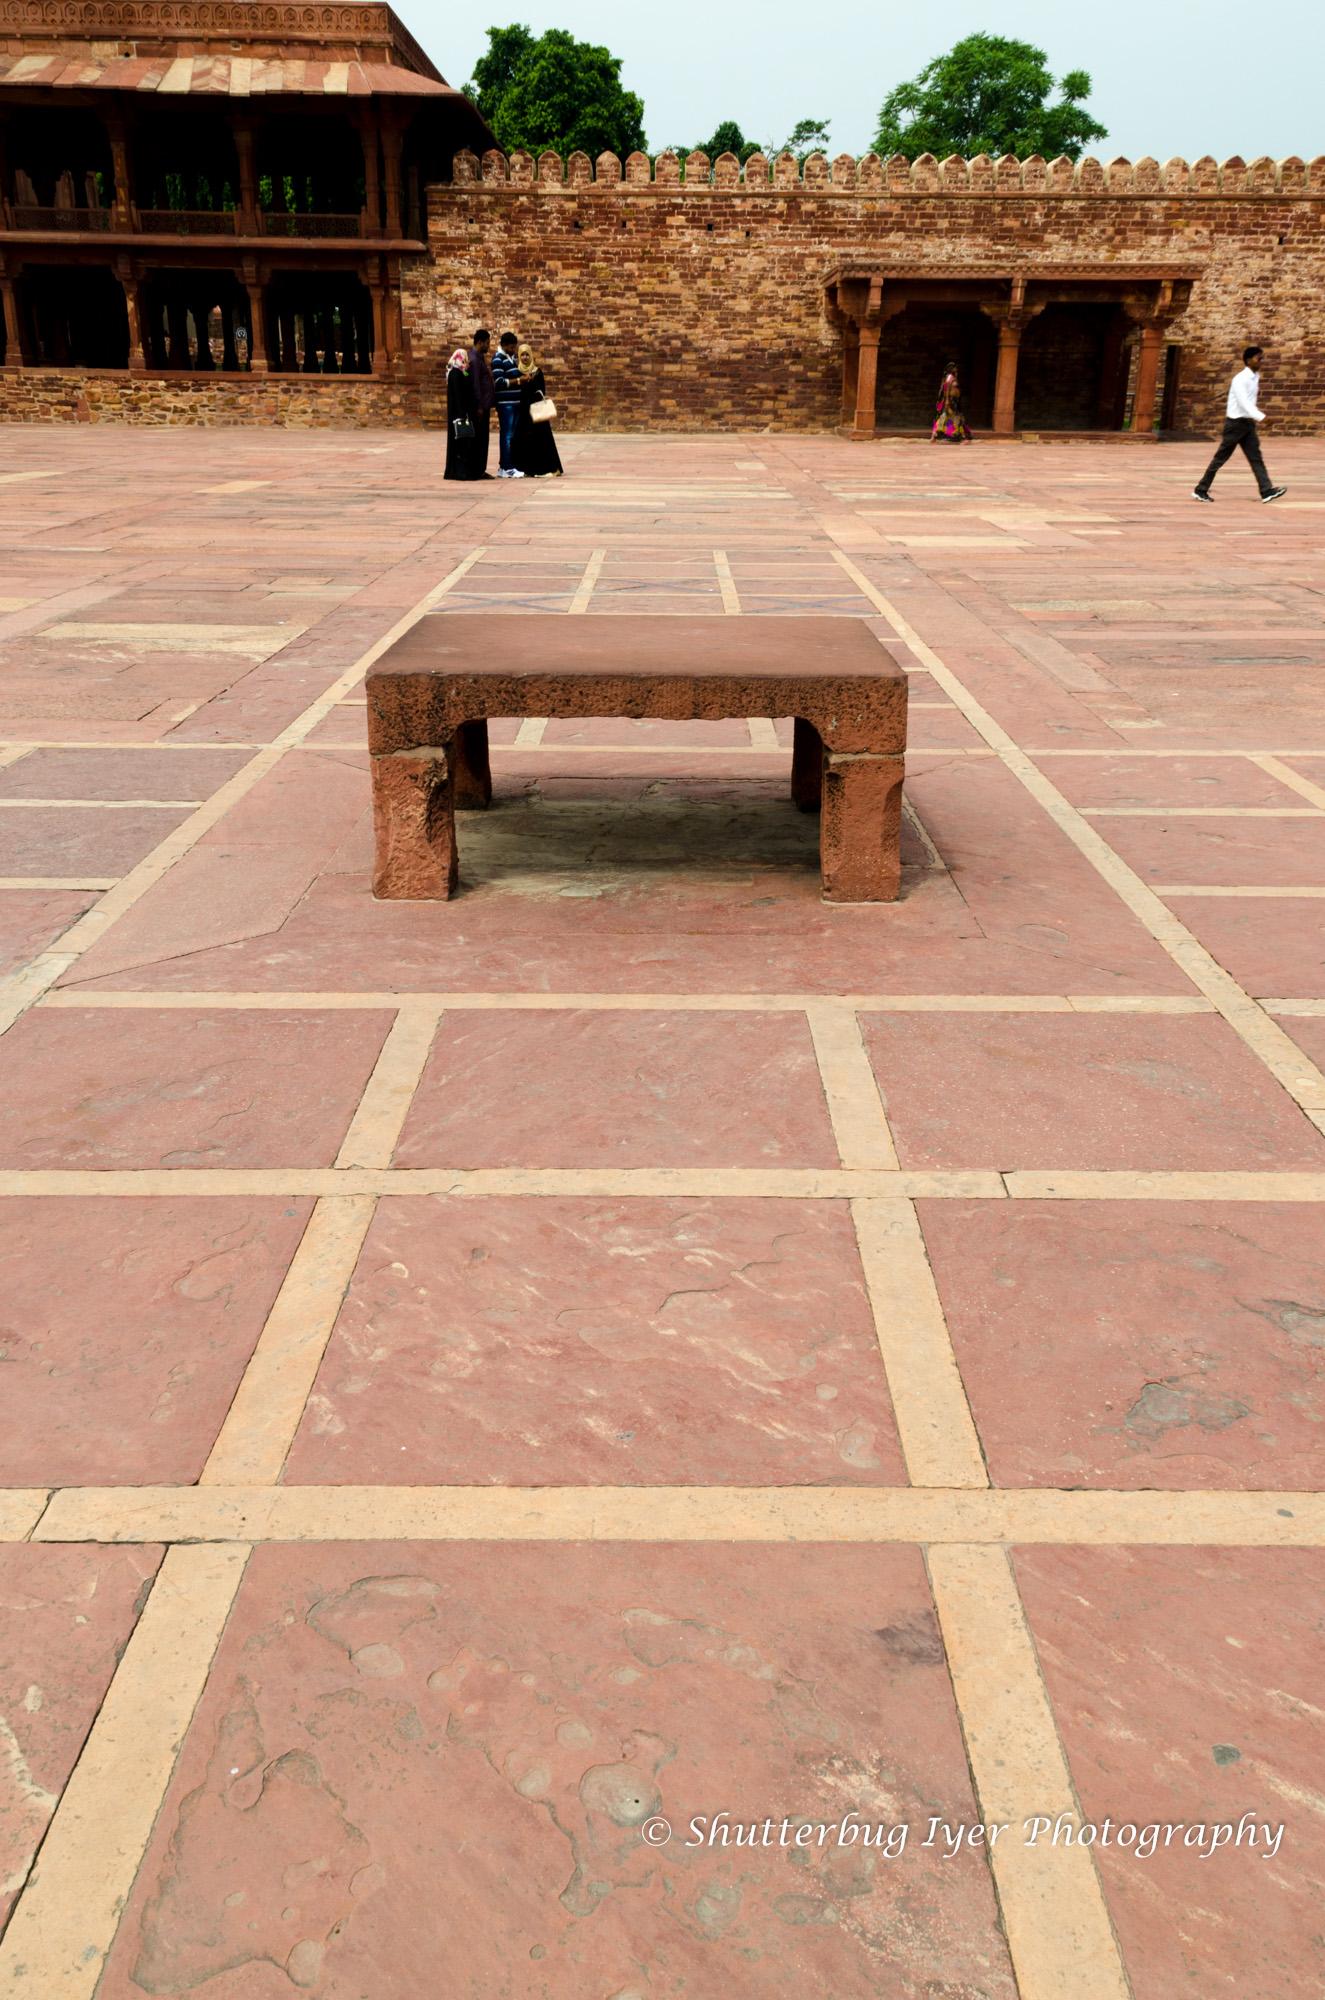 Pachisi Courtyard at Fatehpur Sikri